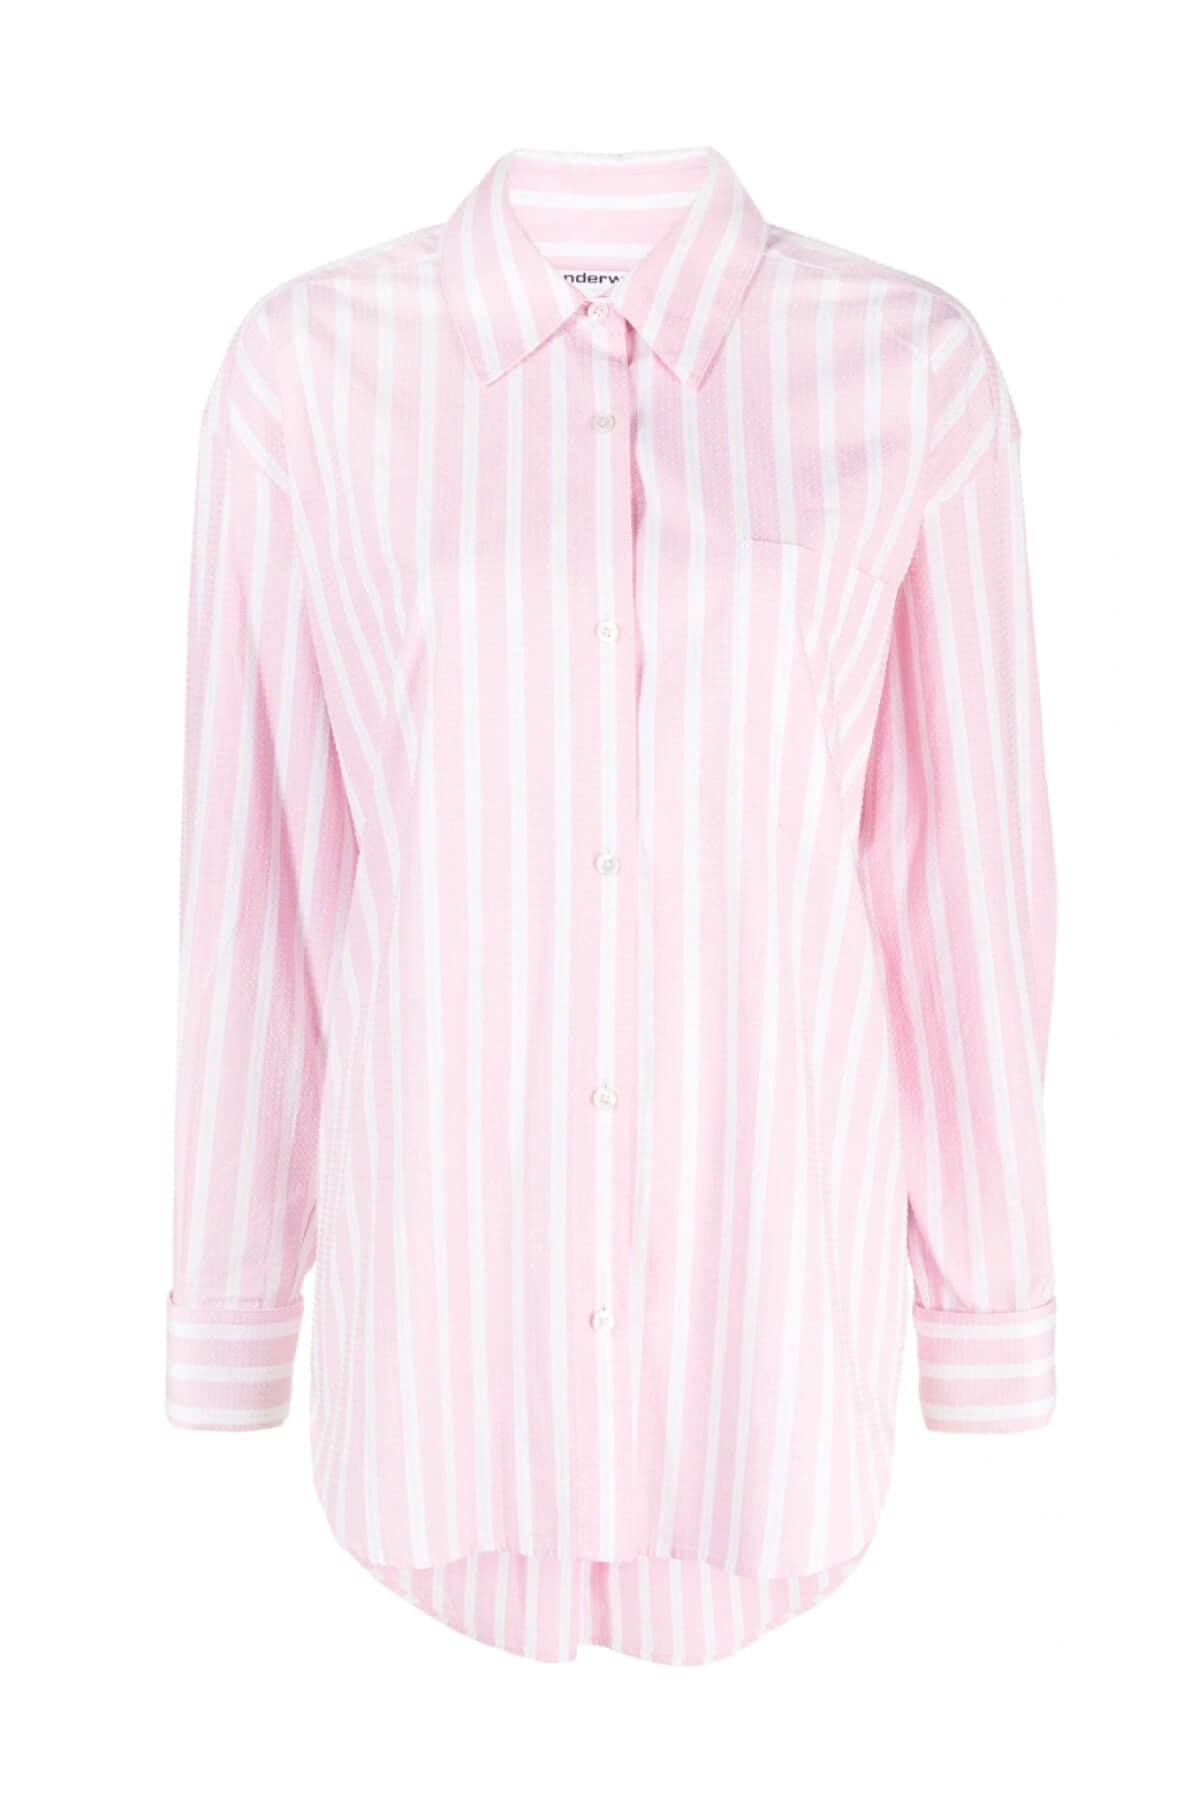 Alexander Wang Clear Hotfix Shirt Jacket - Pink/ White